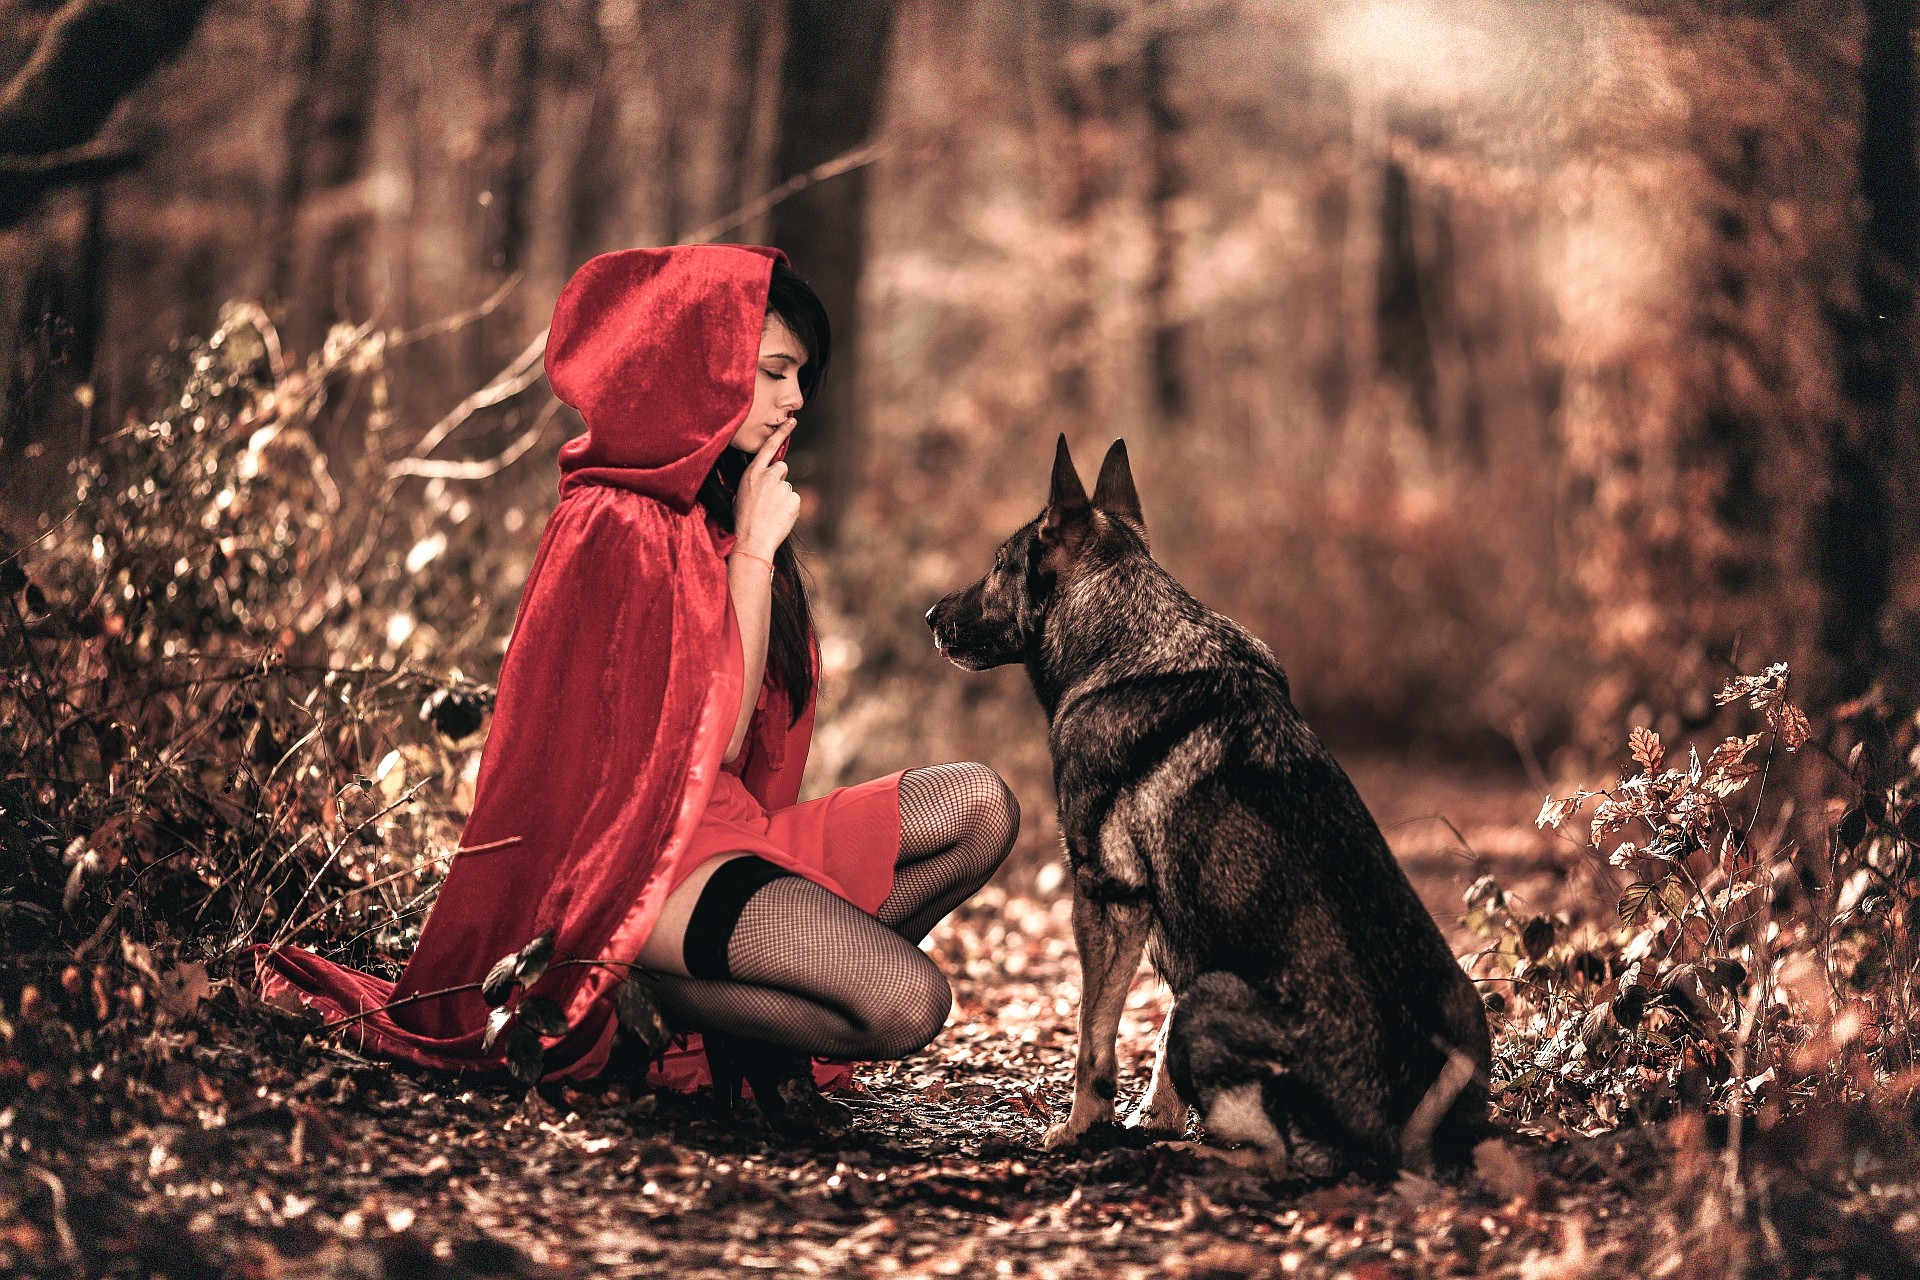 Fantasy Art Women Outdoors Animals Little Red Riding Hood Finger On Lips Filter 1920x1280